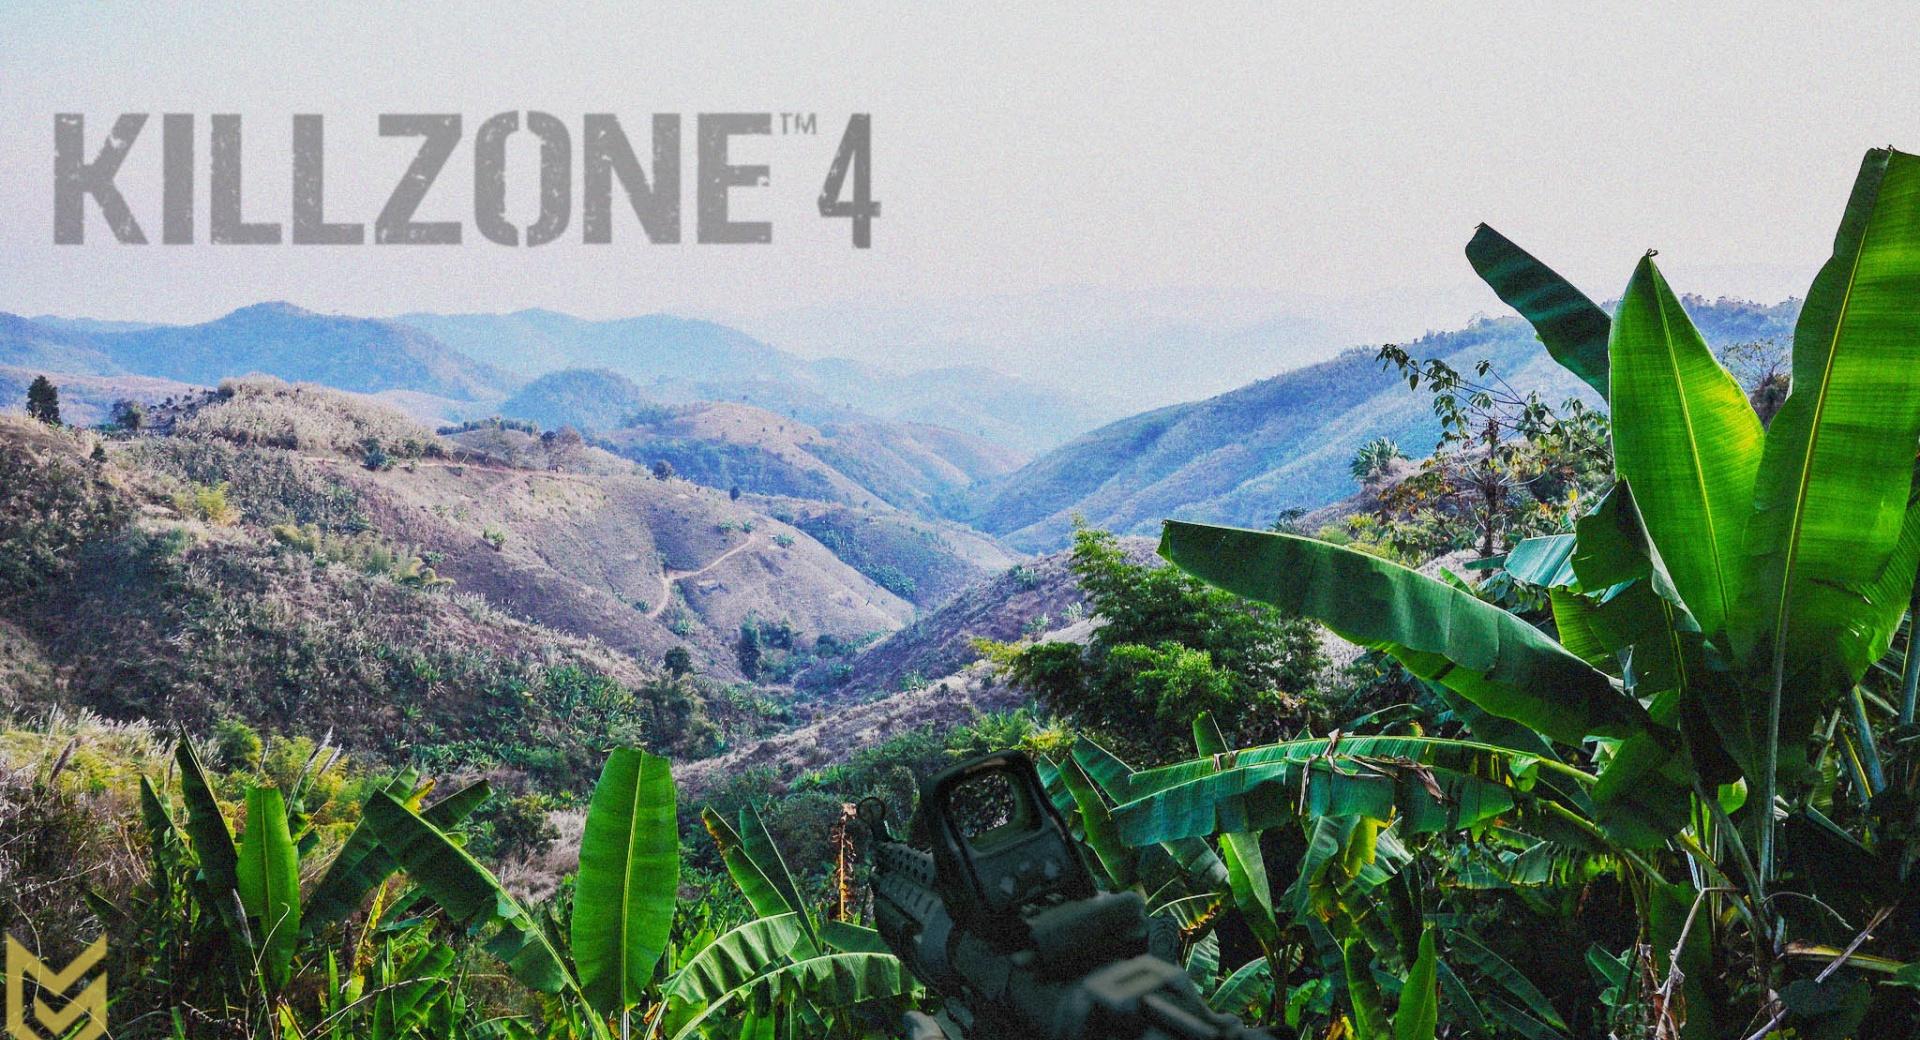 Killzone 4 Jungle at 1024 x 1024 iPad size wallpapers HD quality